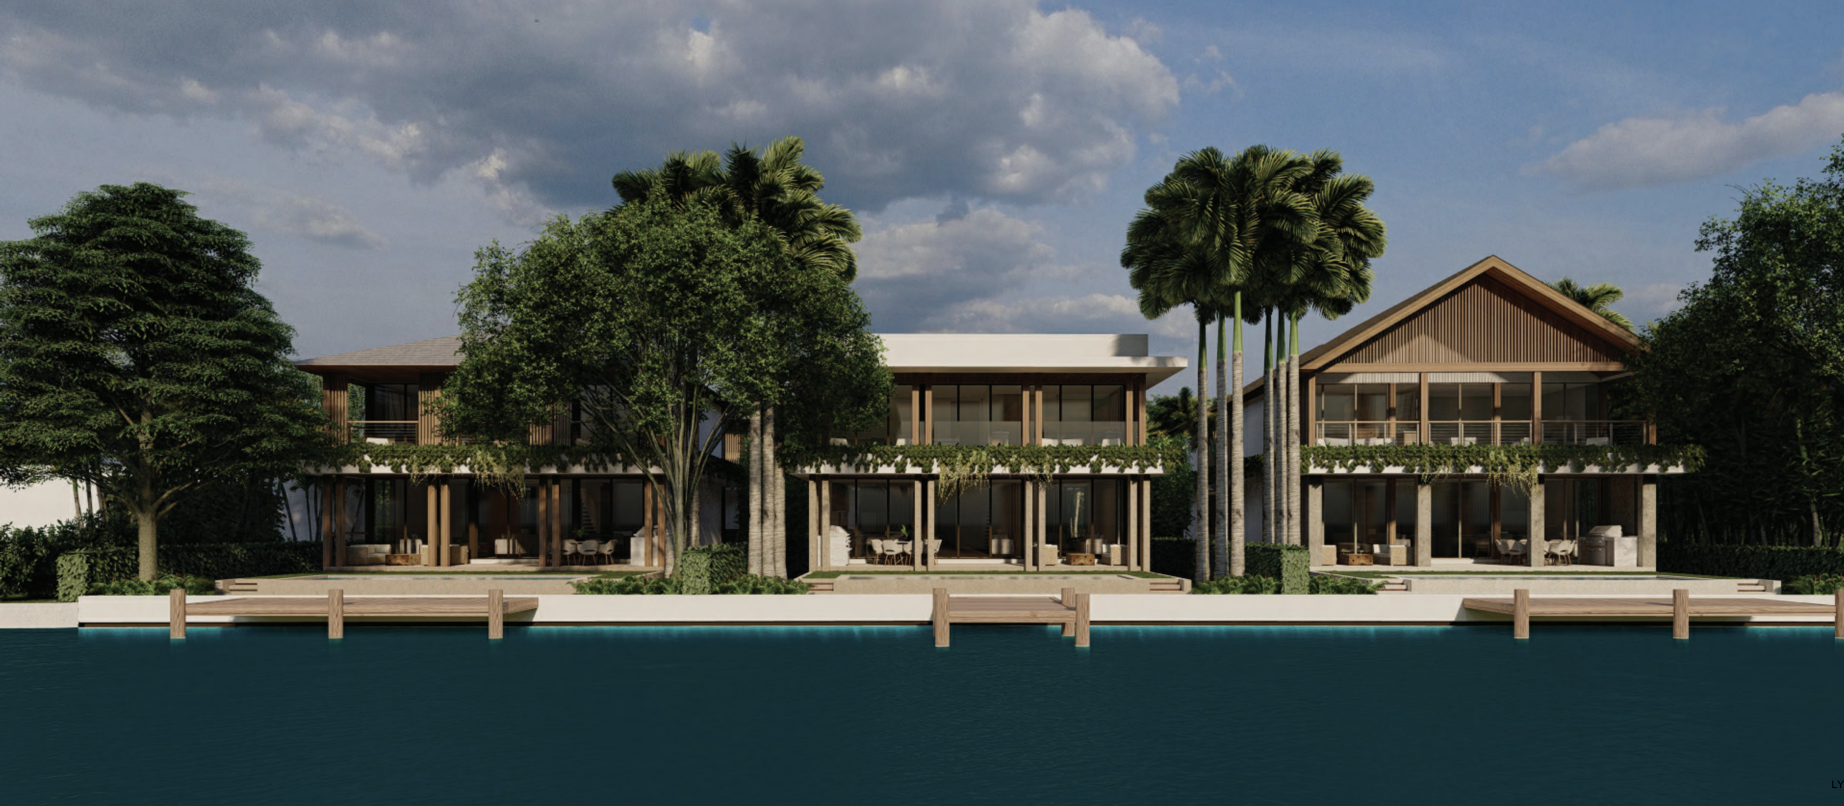 Jamie LeFrak Plans Miami Beach Waterfront Homes for His Kids